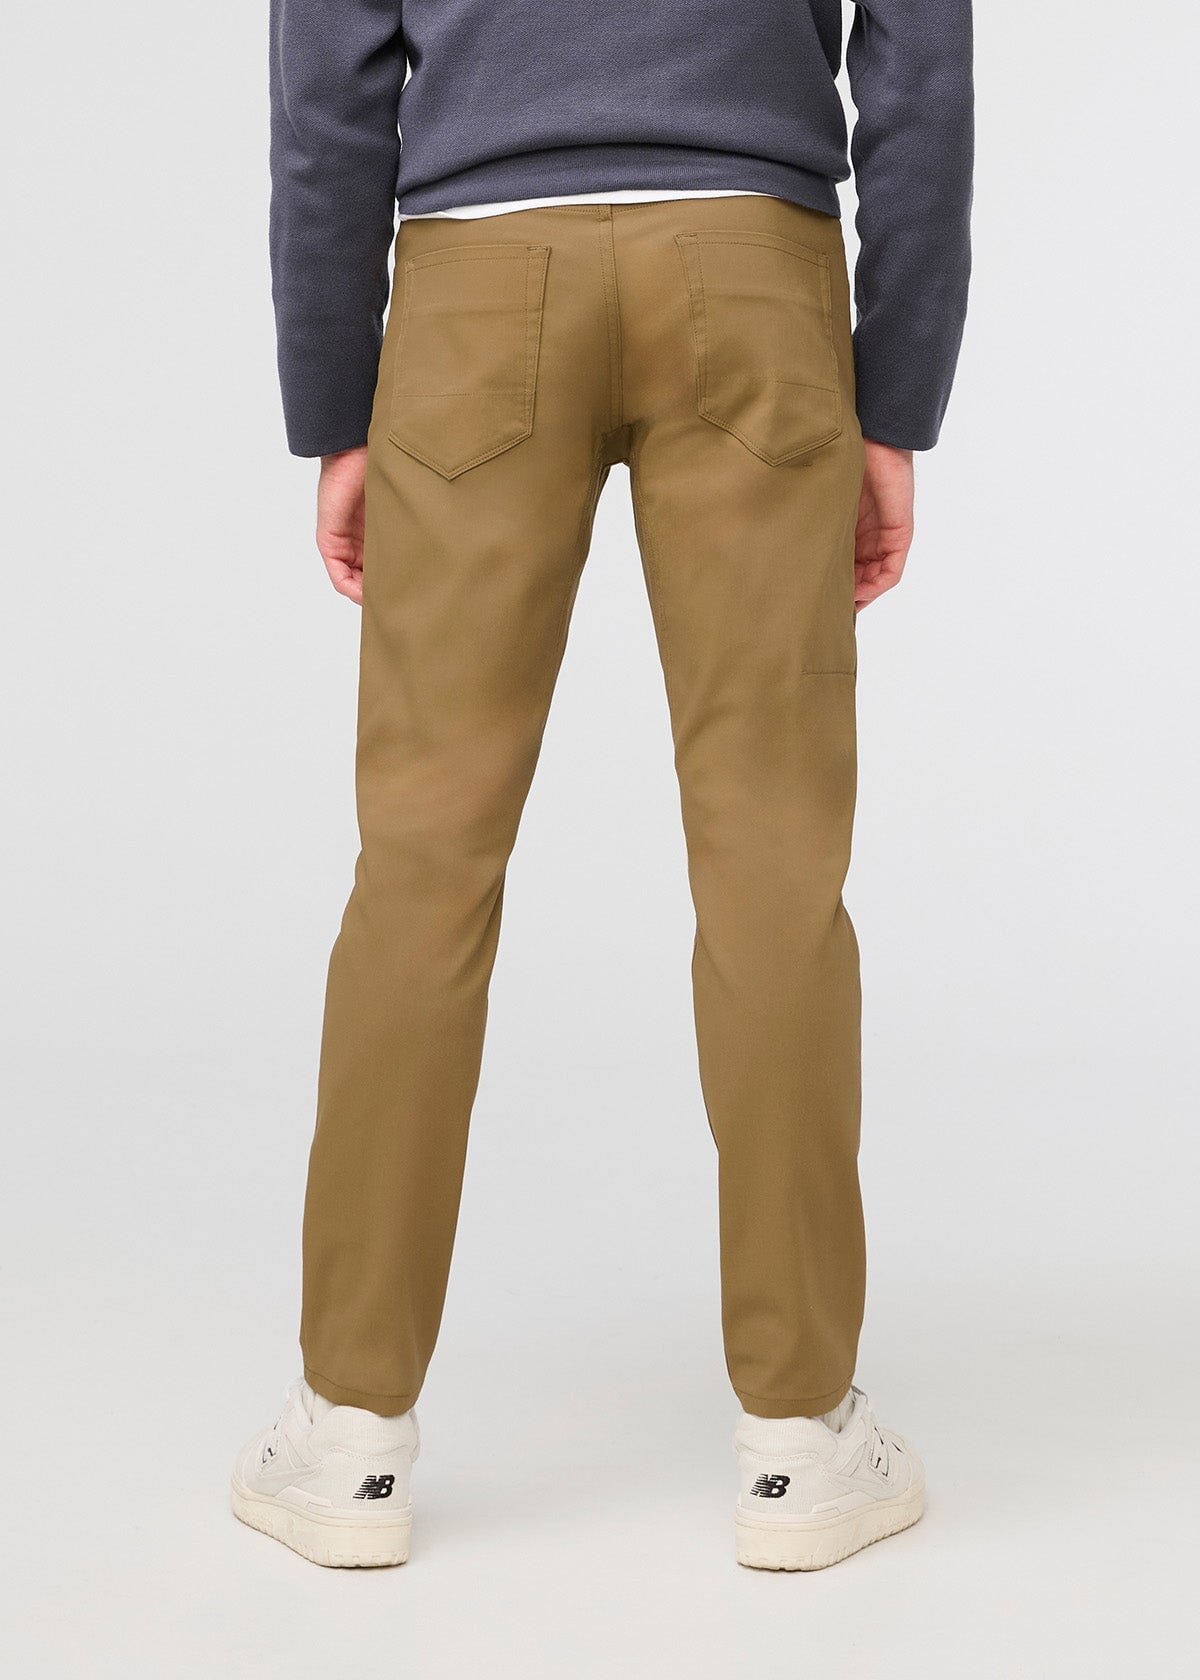 Men's Khaki Slim Fit Stretch Pant